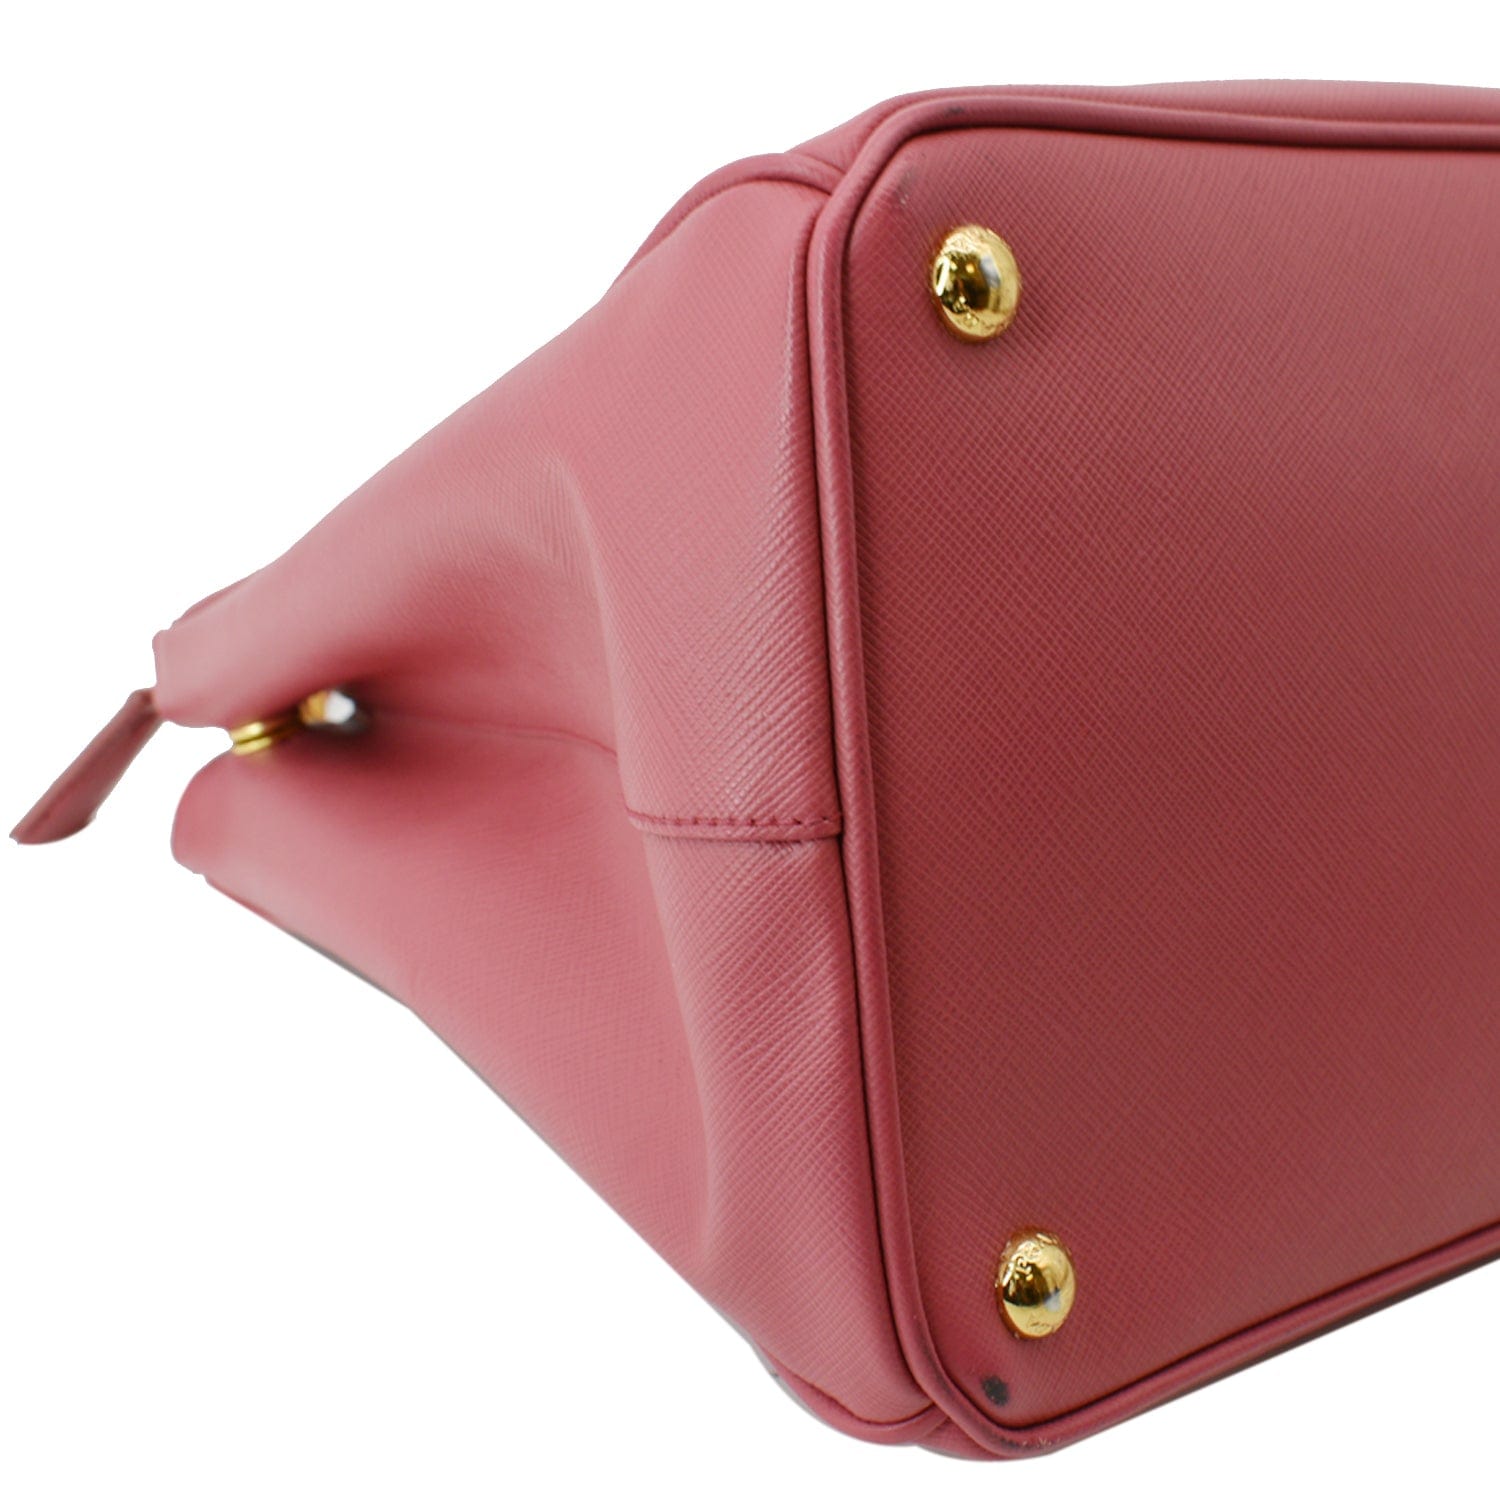 Prada, Bags, Prada Saffiano Lux Medium Galleria Double Zip Tote Bag Nude  Pink